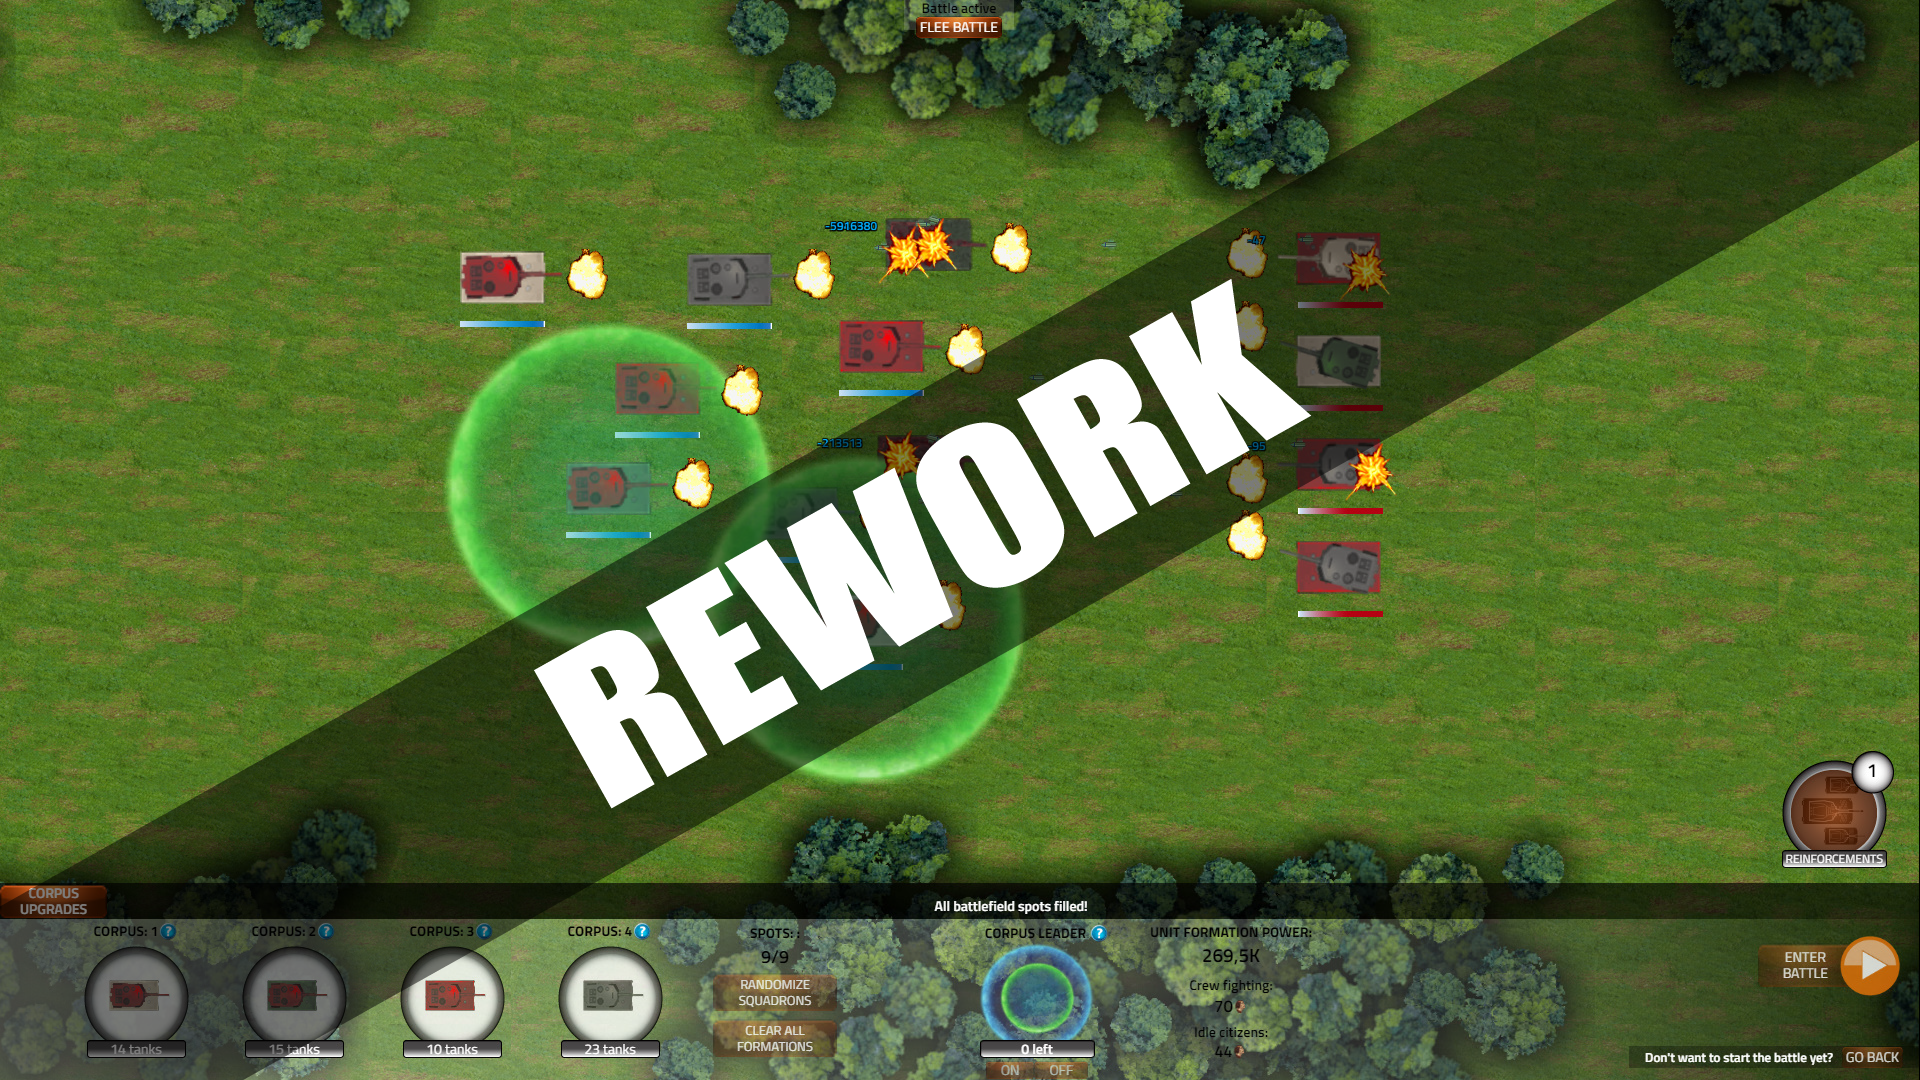 combat screenshot - rework